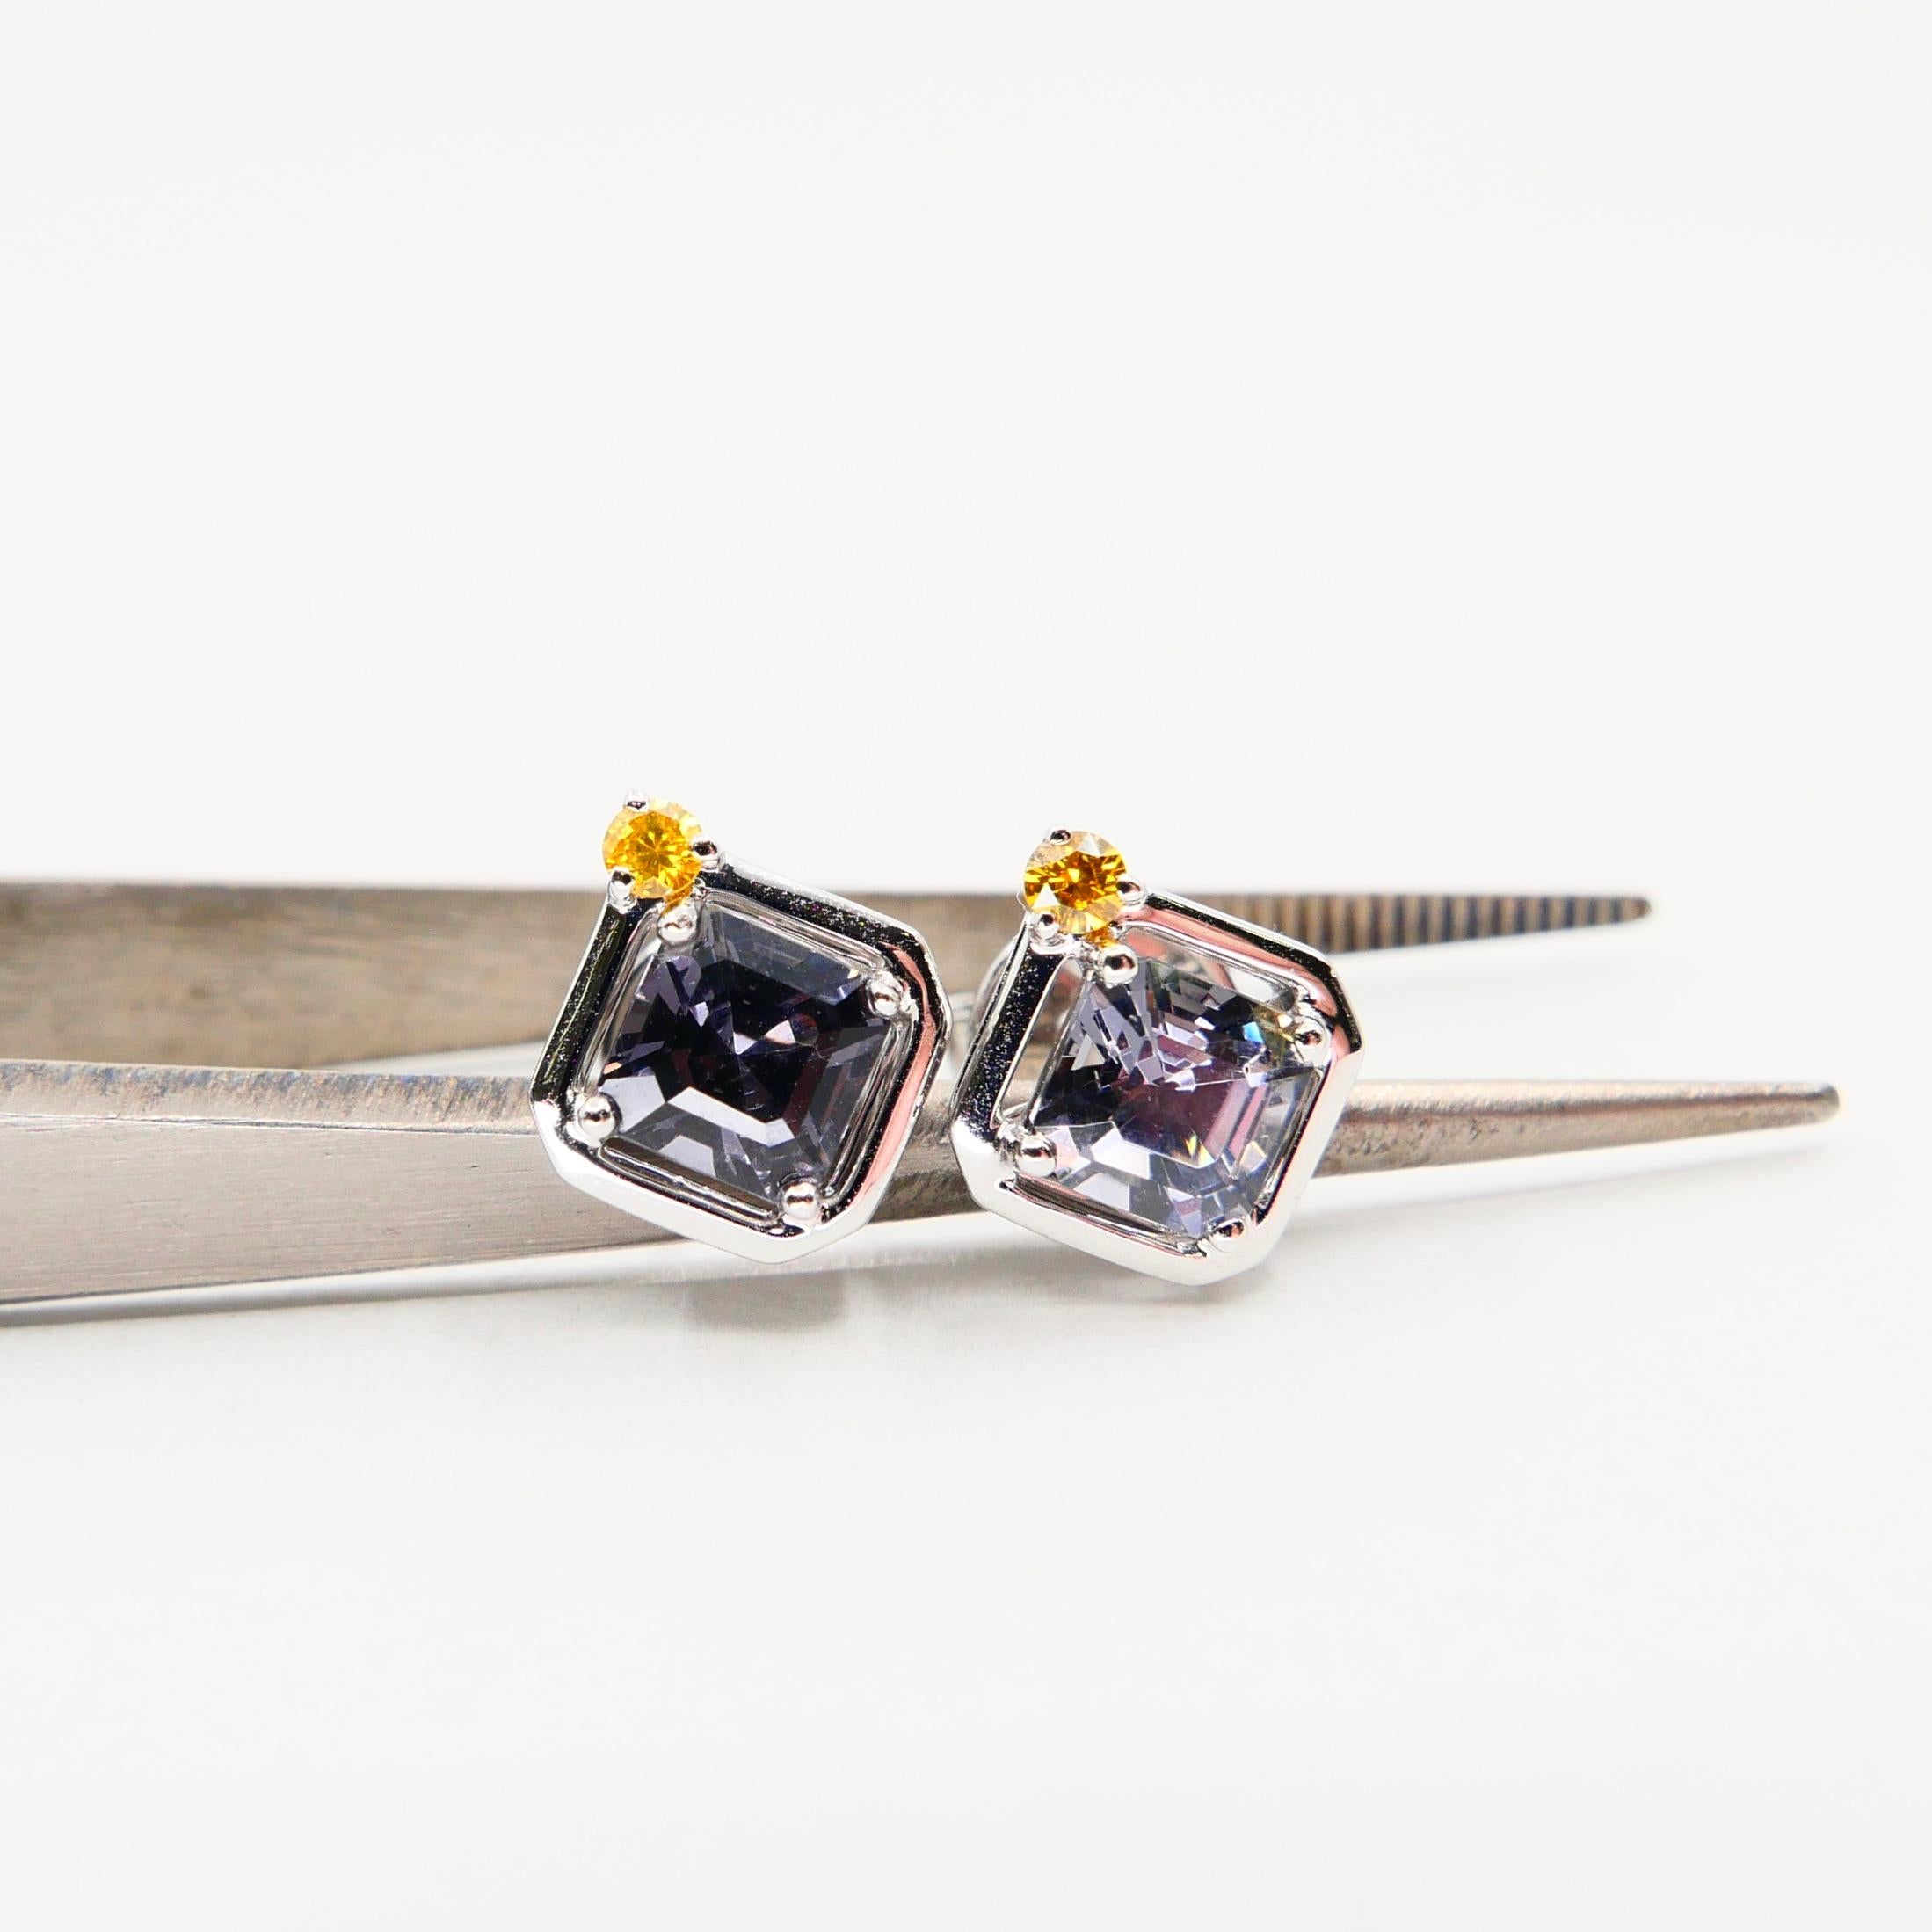 10 Ct Asscher Cut Grey Spinel & Fancy Vivid Yellow Diamond Tennis Bracelet. For Sale 5